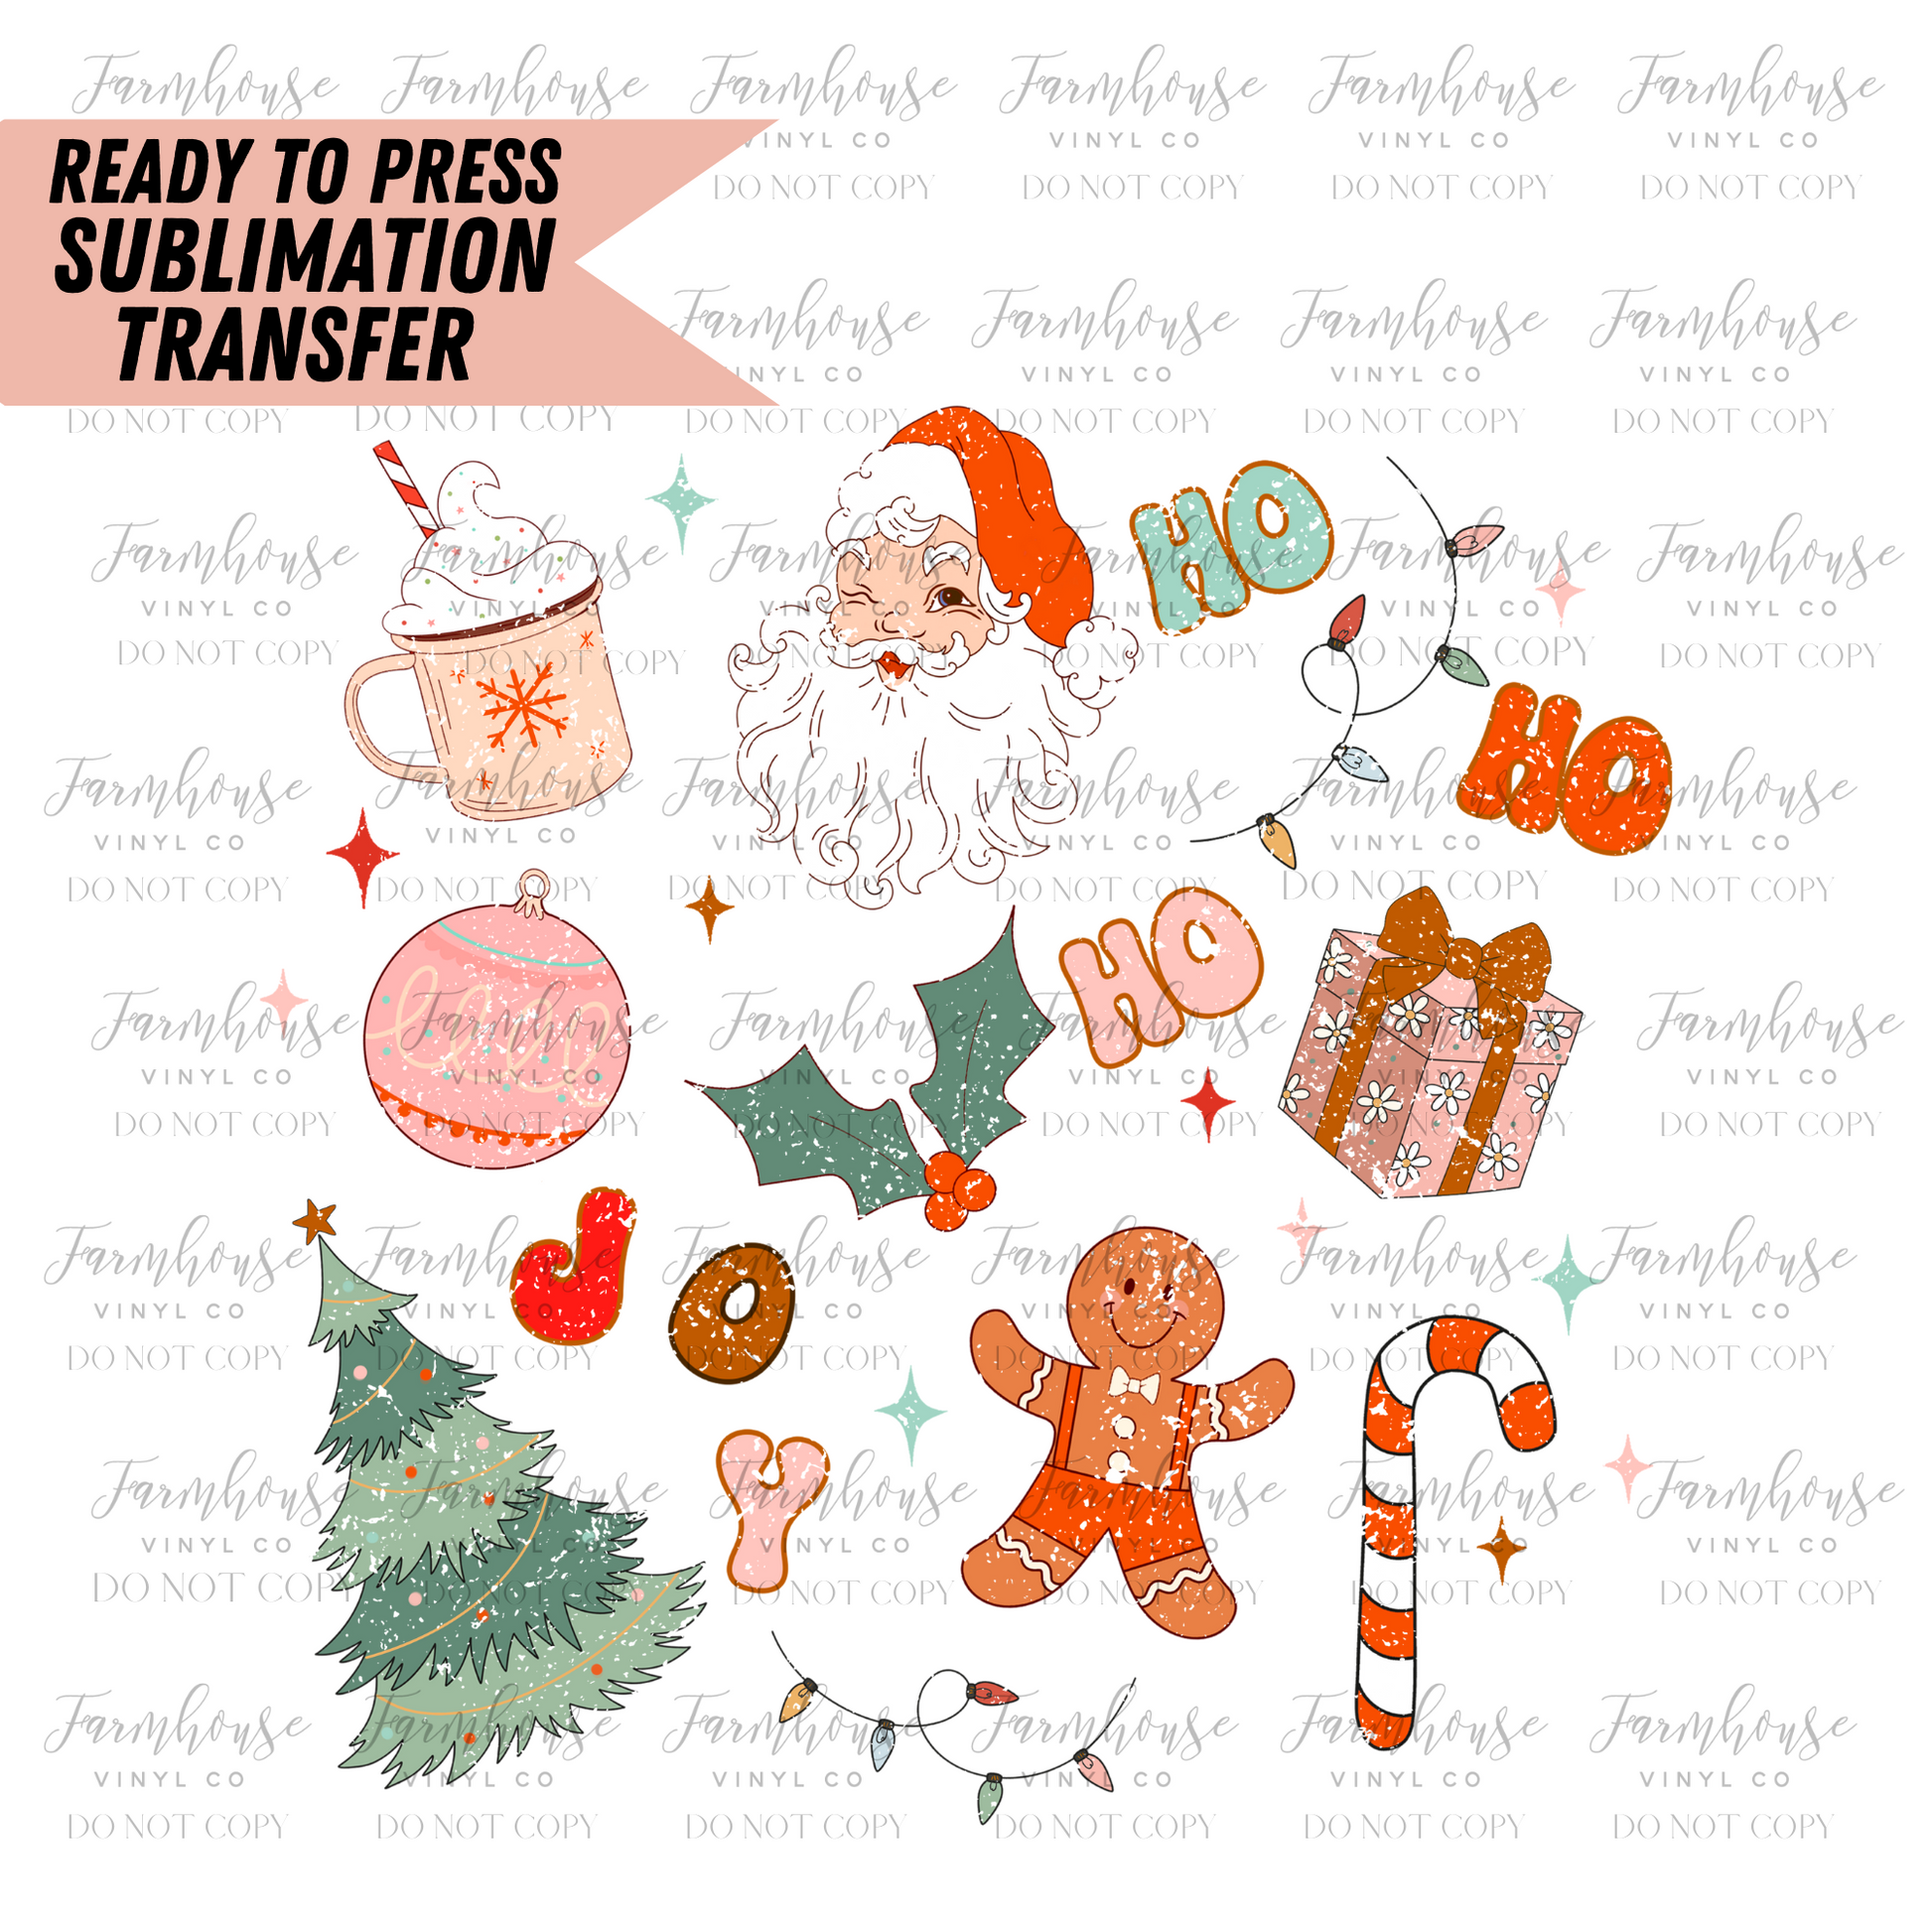 Santas Favorite Things Ready To Press Sublimation Transfer Design - Farmhouse Vinyl Co